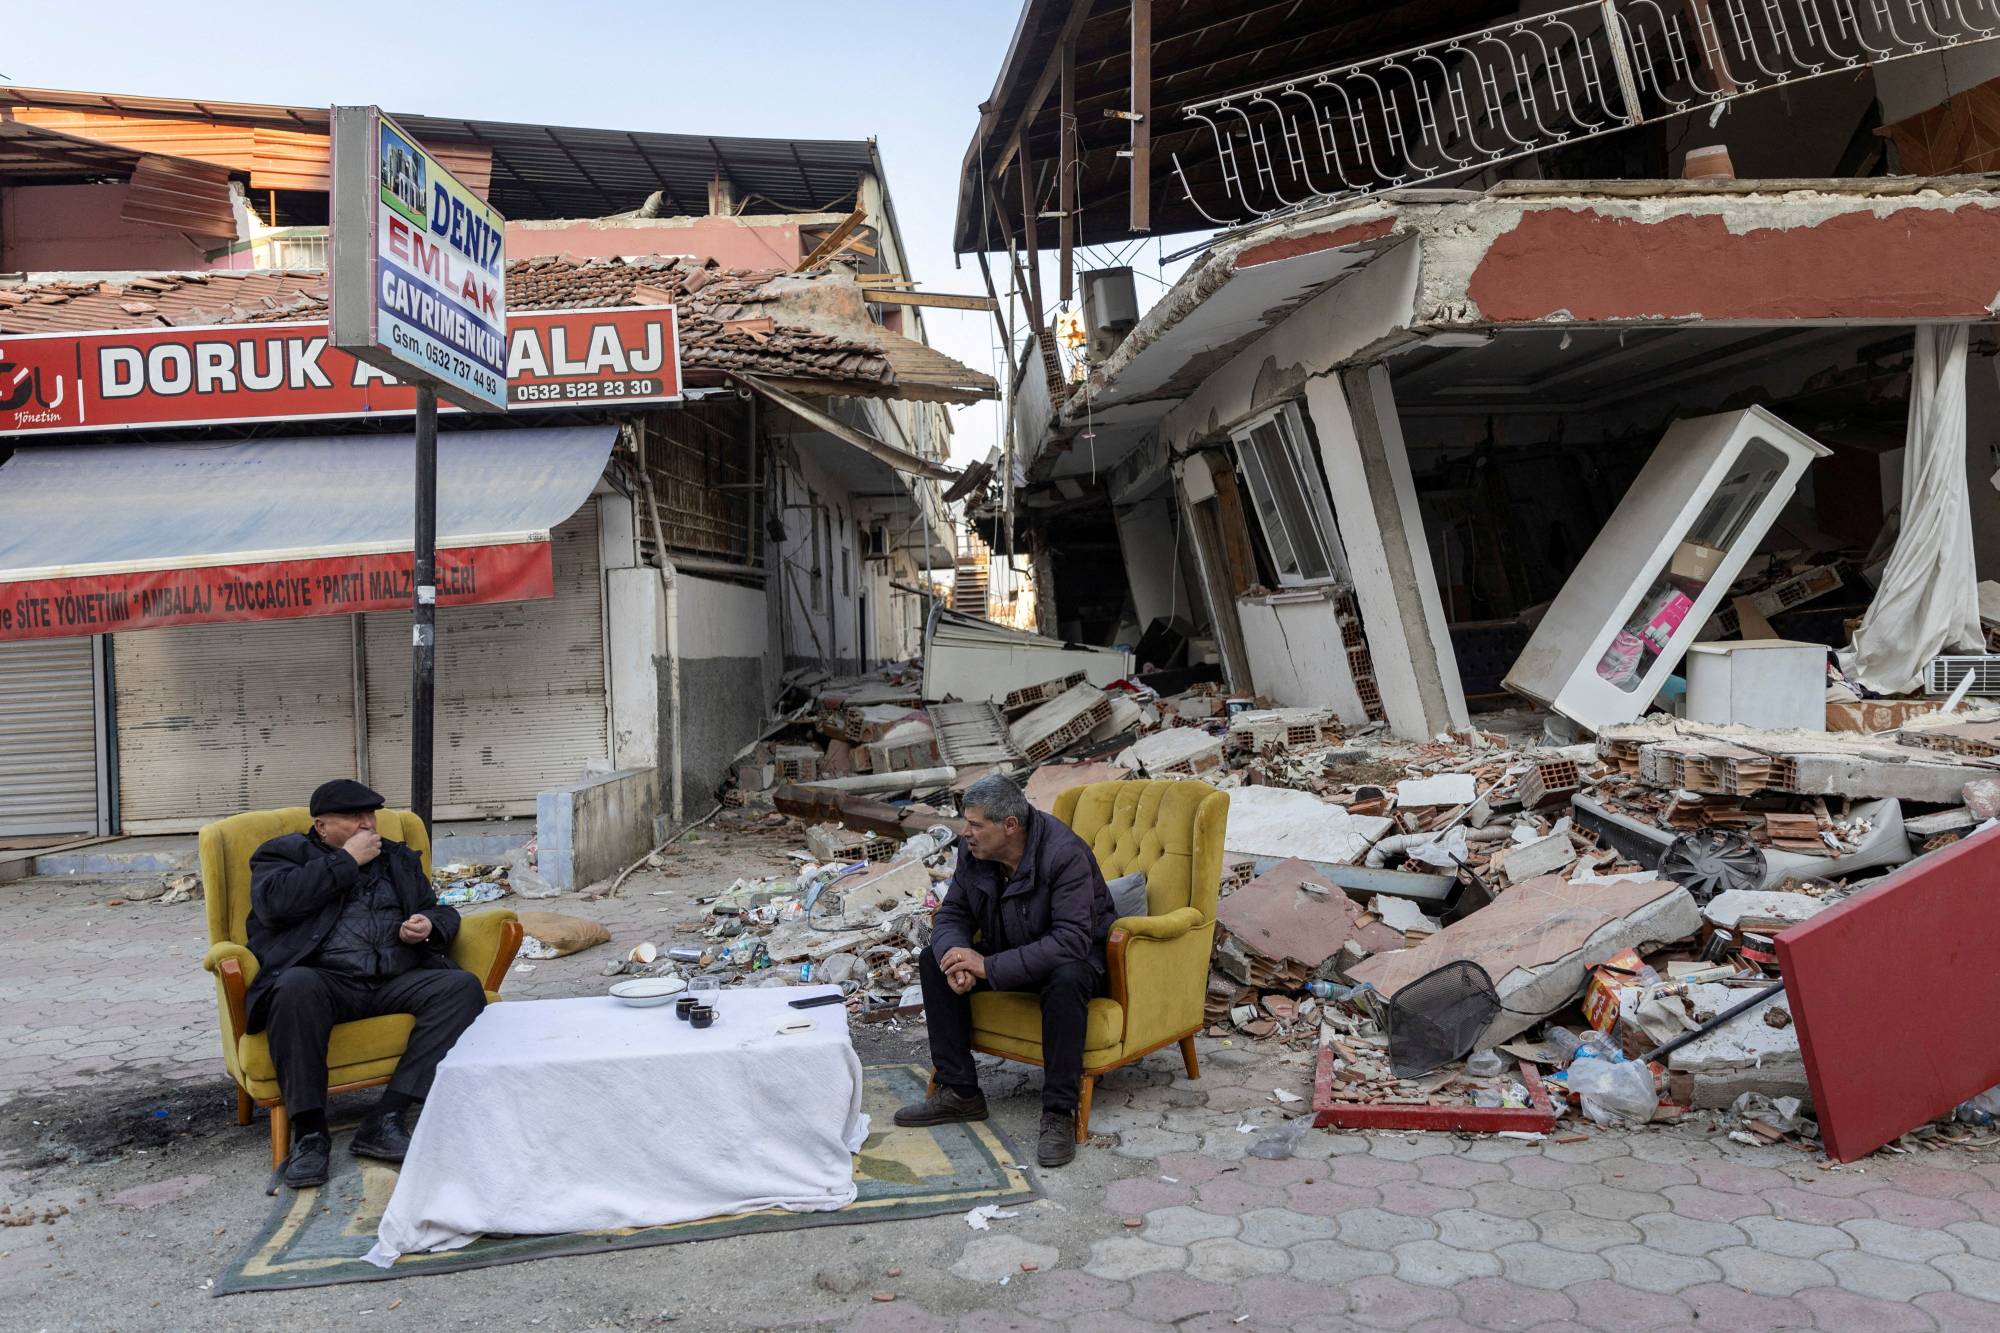 Turkey's Erdogan boasted of letting builders evade earthquake